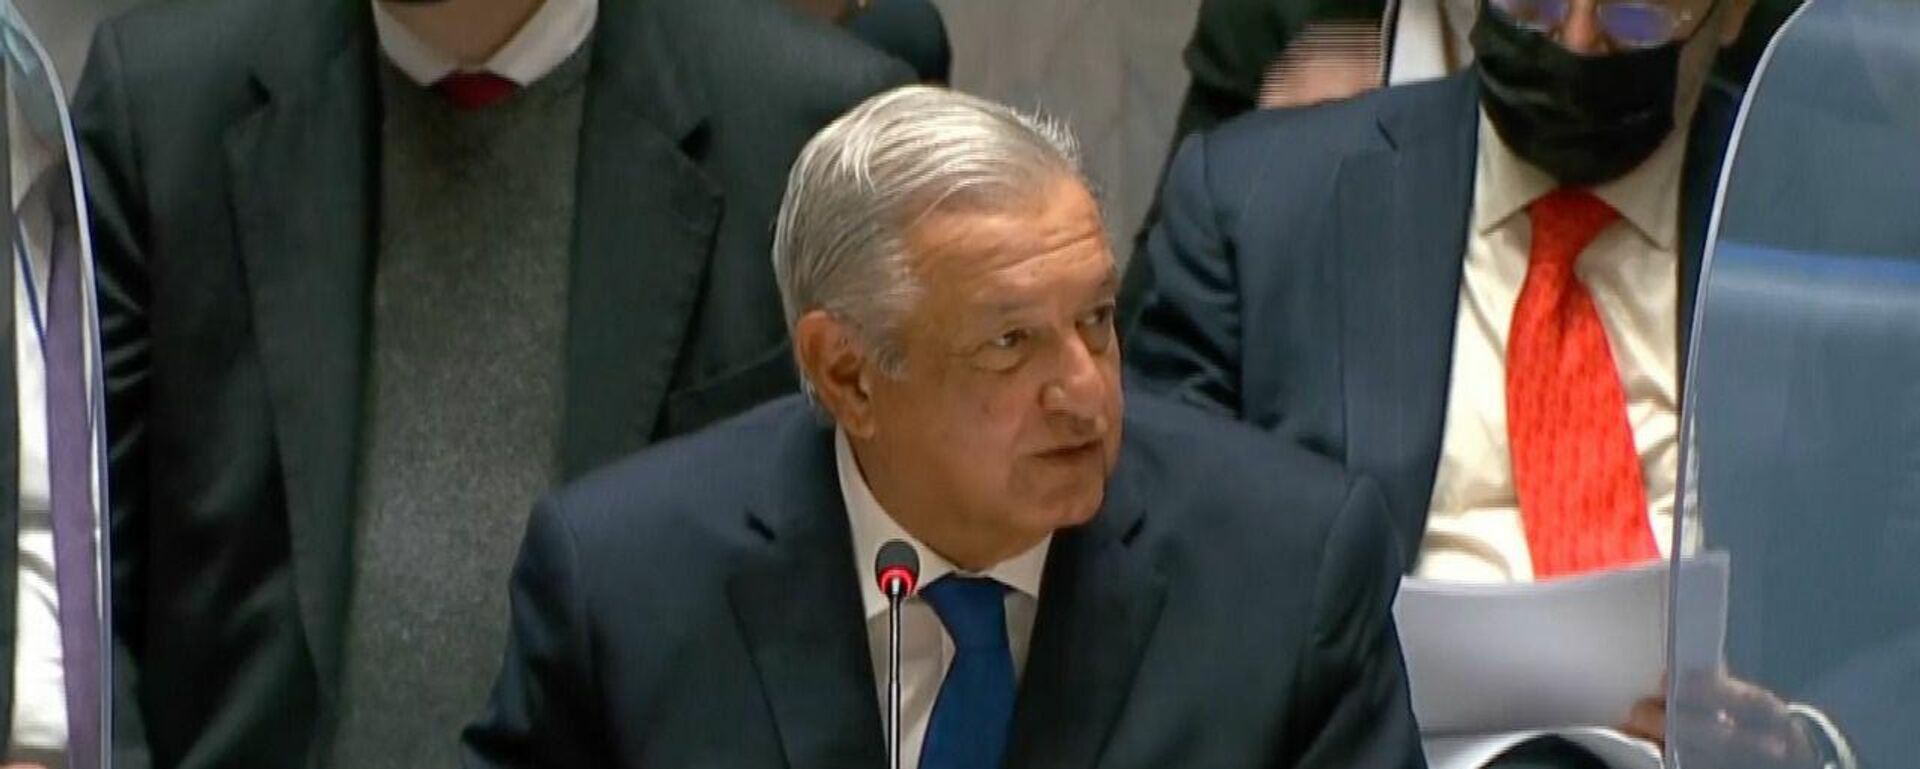 Andrés Manuel López Obrador, presidente de México, dirigió un mensaje desde la ONU  - Sputnik Mundo, 1920, 09.11.2021